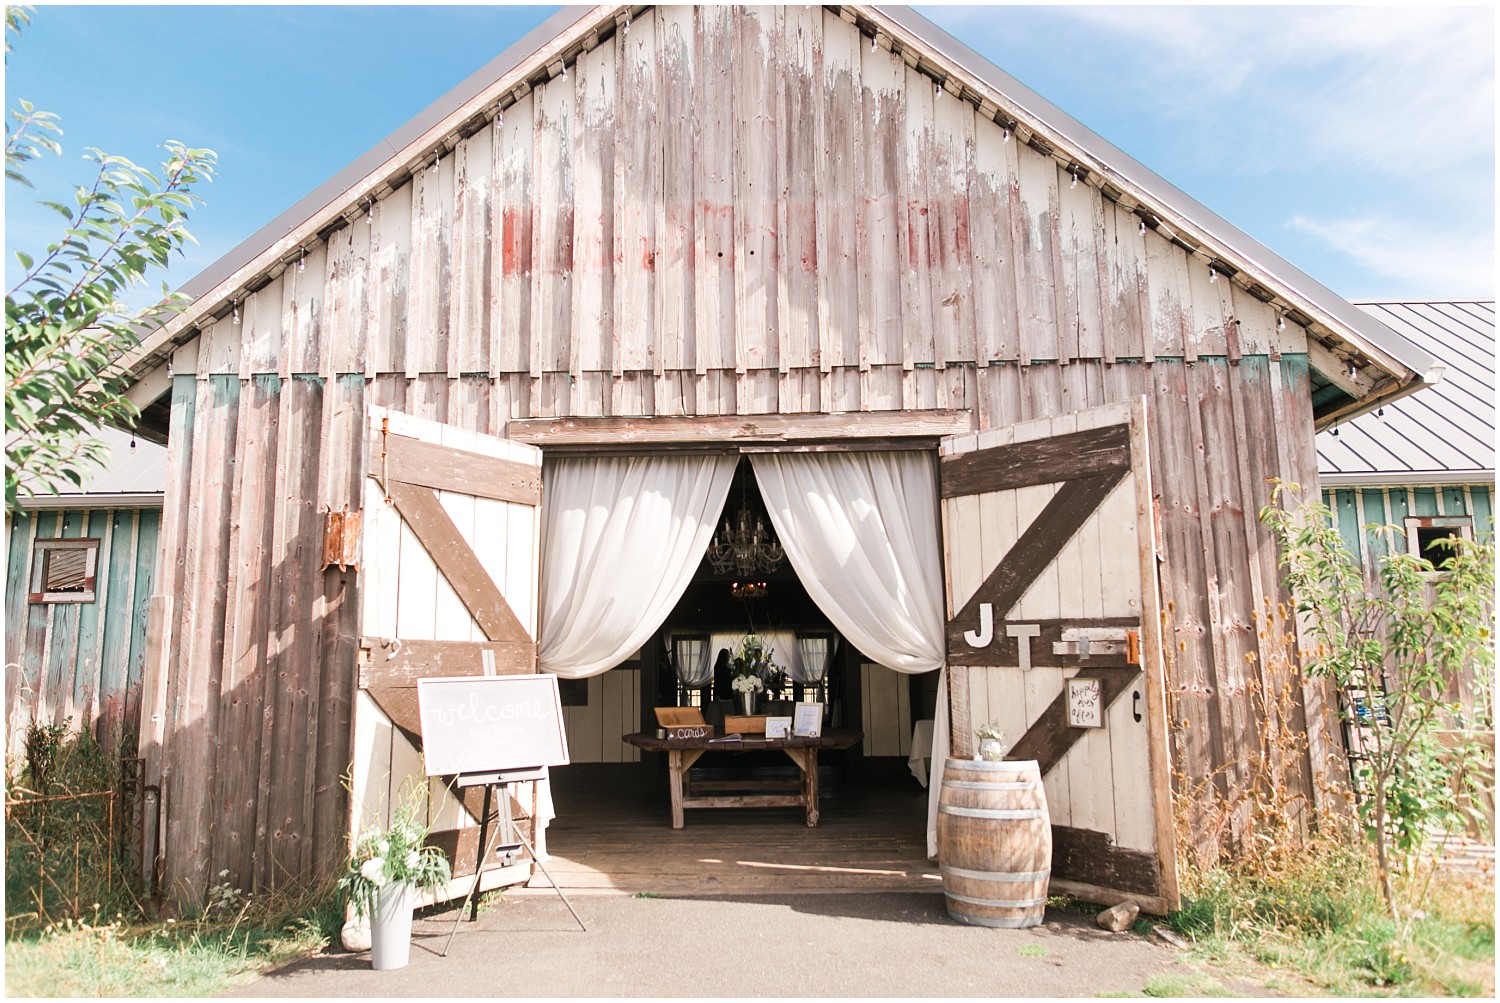 The Barn on Jackson Wedding | Jason & Taylor